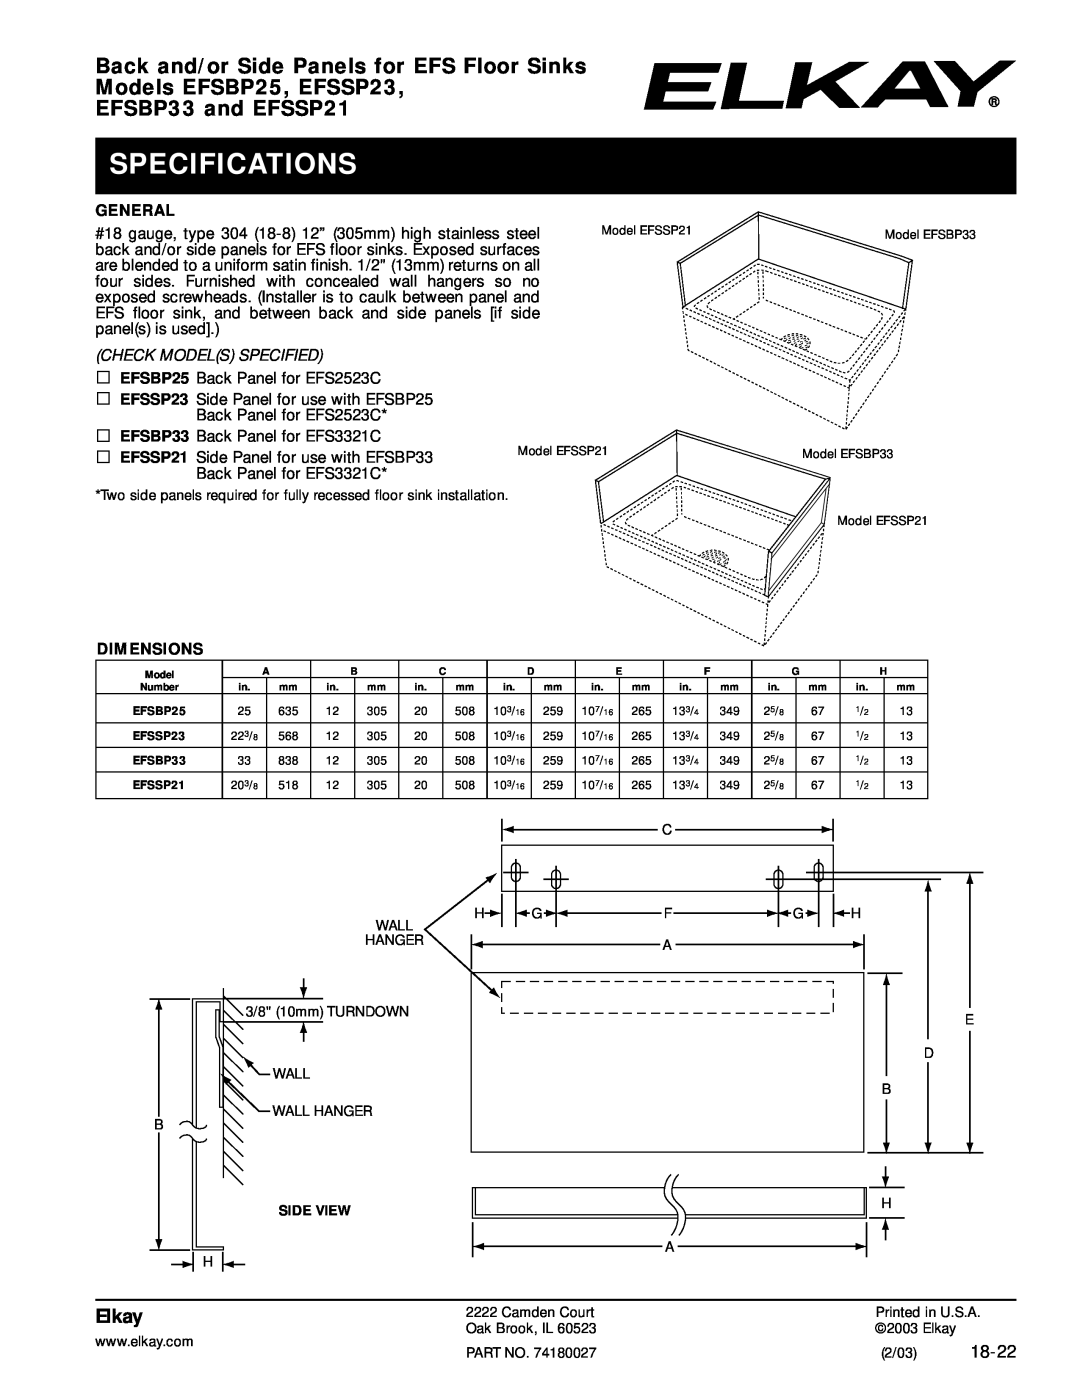 Elkay specifications Specifications, Back and/or Side Panels for EFS Floor Sinks, Models EFSBP25, EFSSP23, Elkay, 18-22 